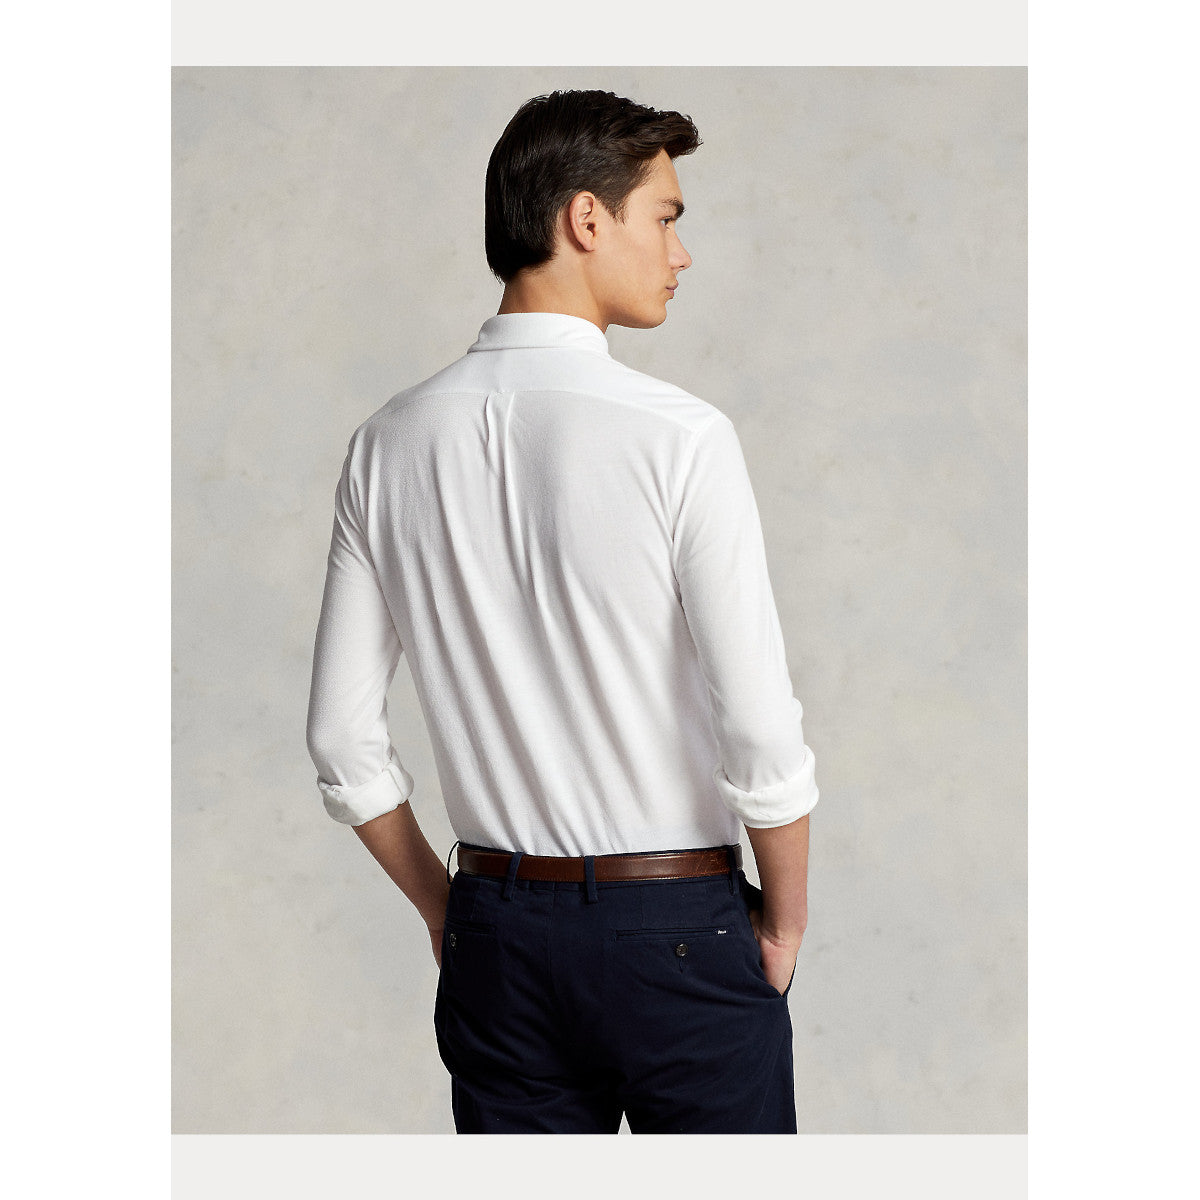 Polo Ralph Lauren LS Mesh Shirt 003 White